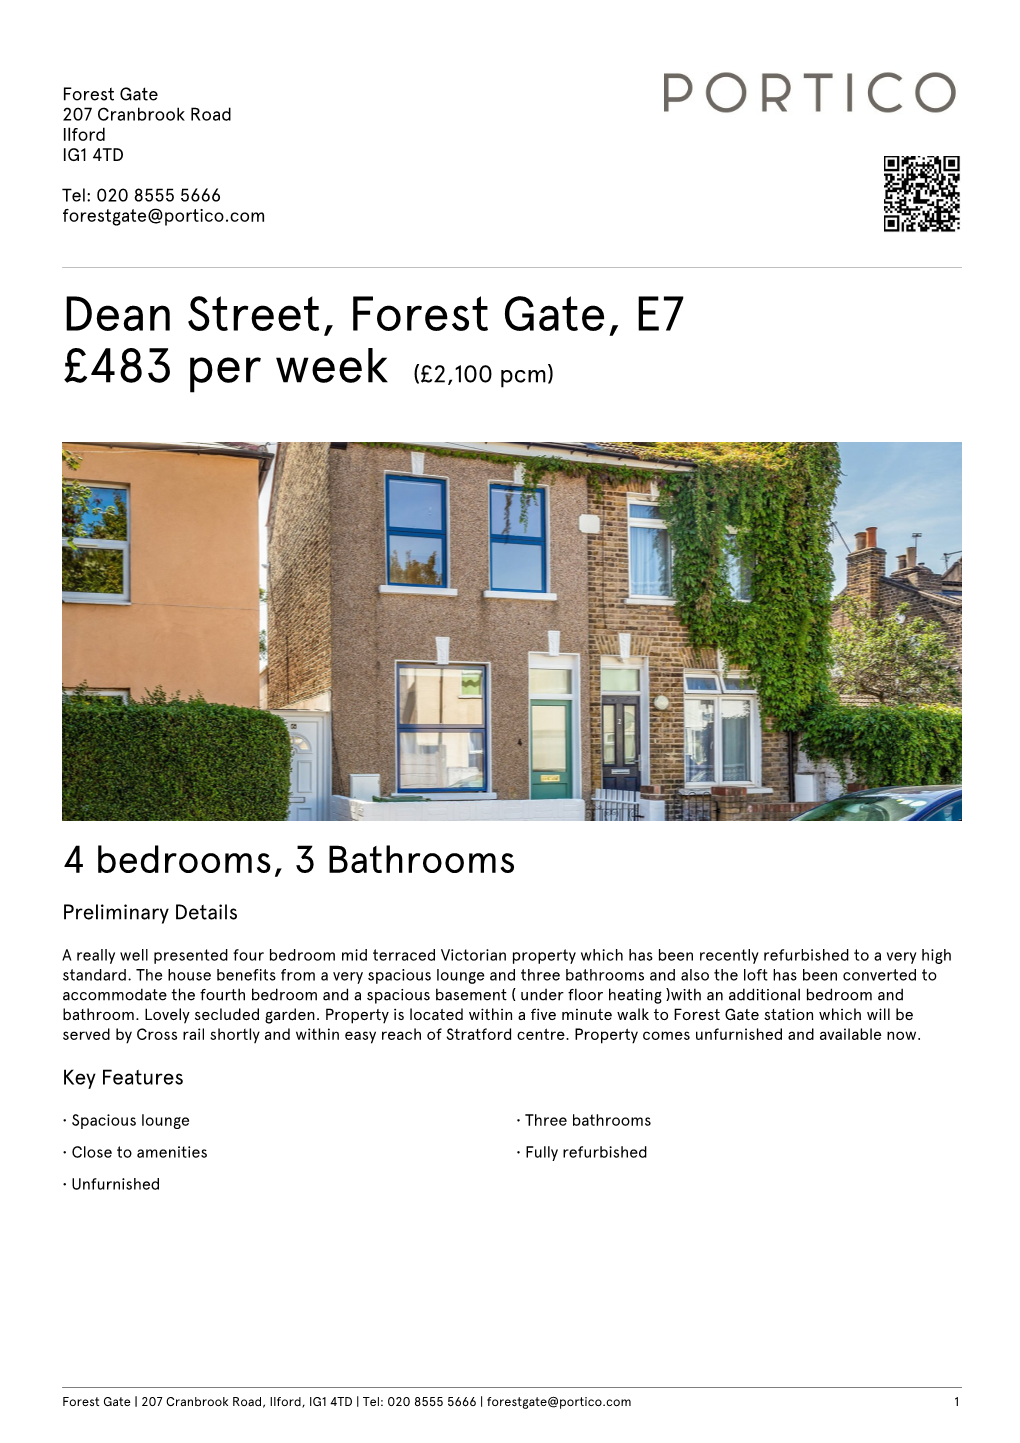 Dean Street, Forest Gate, E7 £483 Per Week